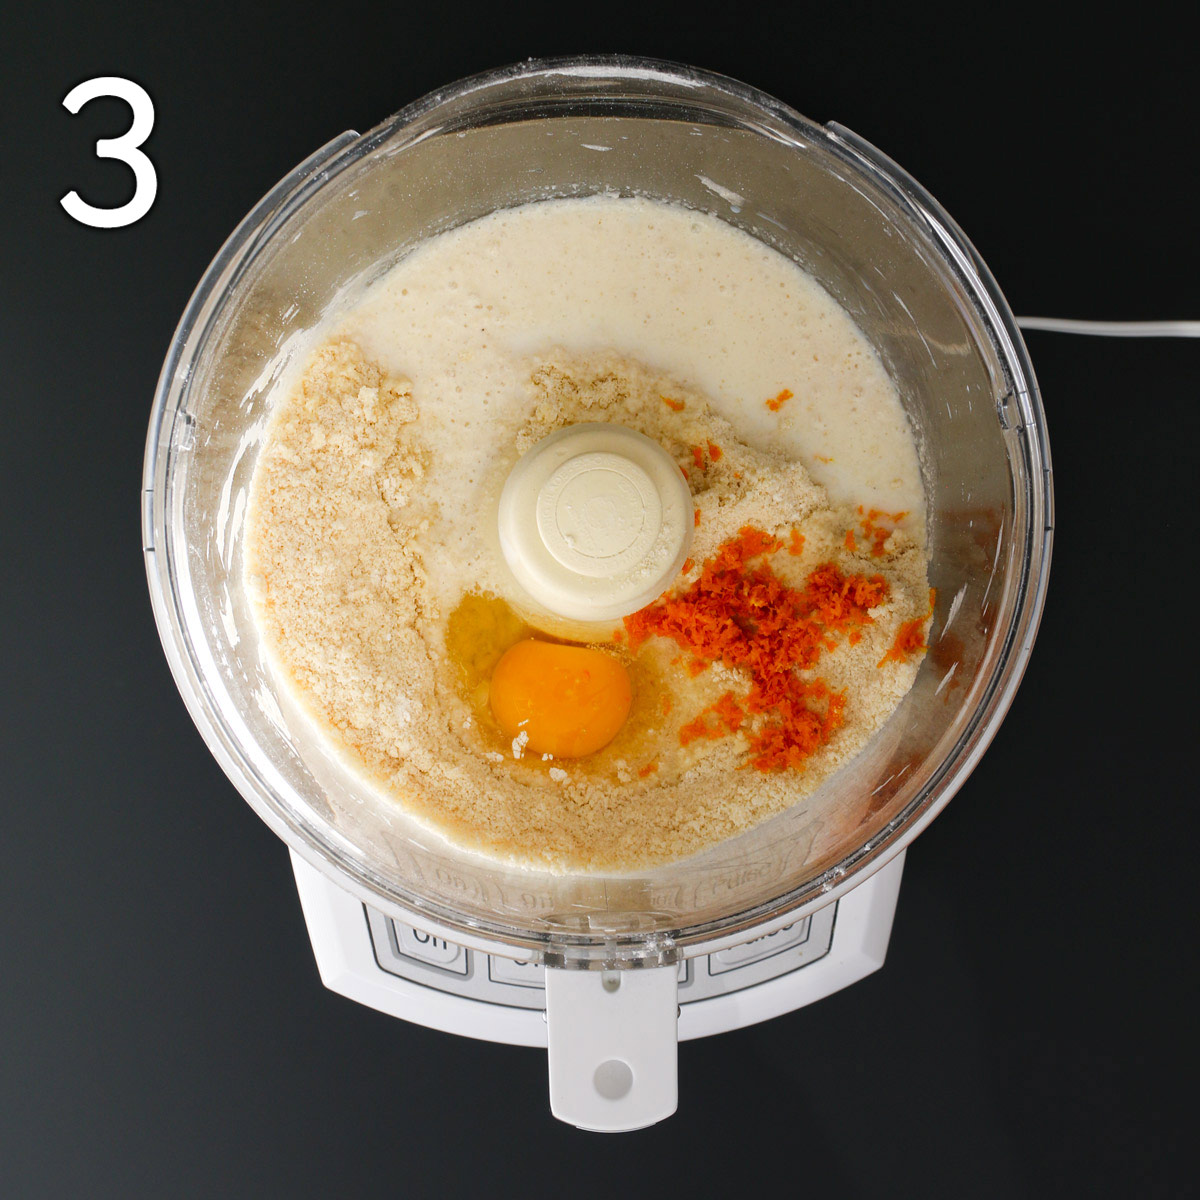 adding egg, milk, and orange zest to crumb mixture in food processor bowl.